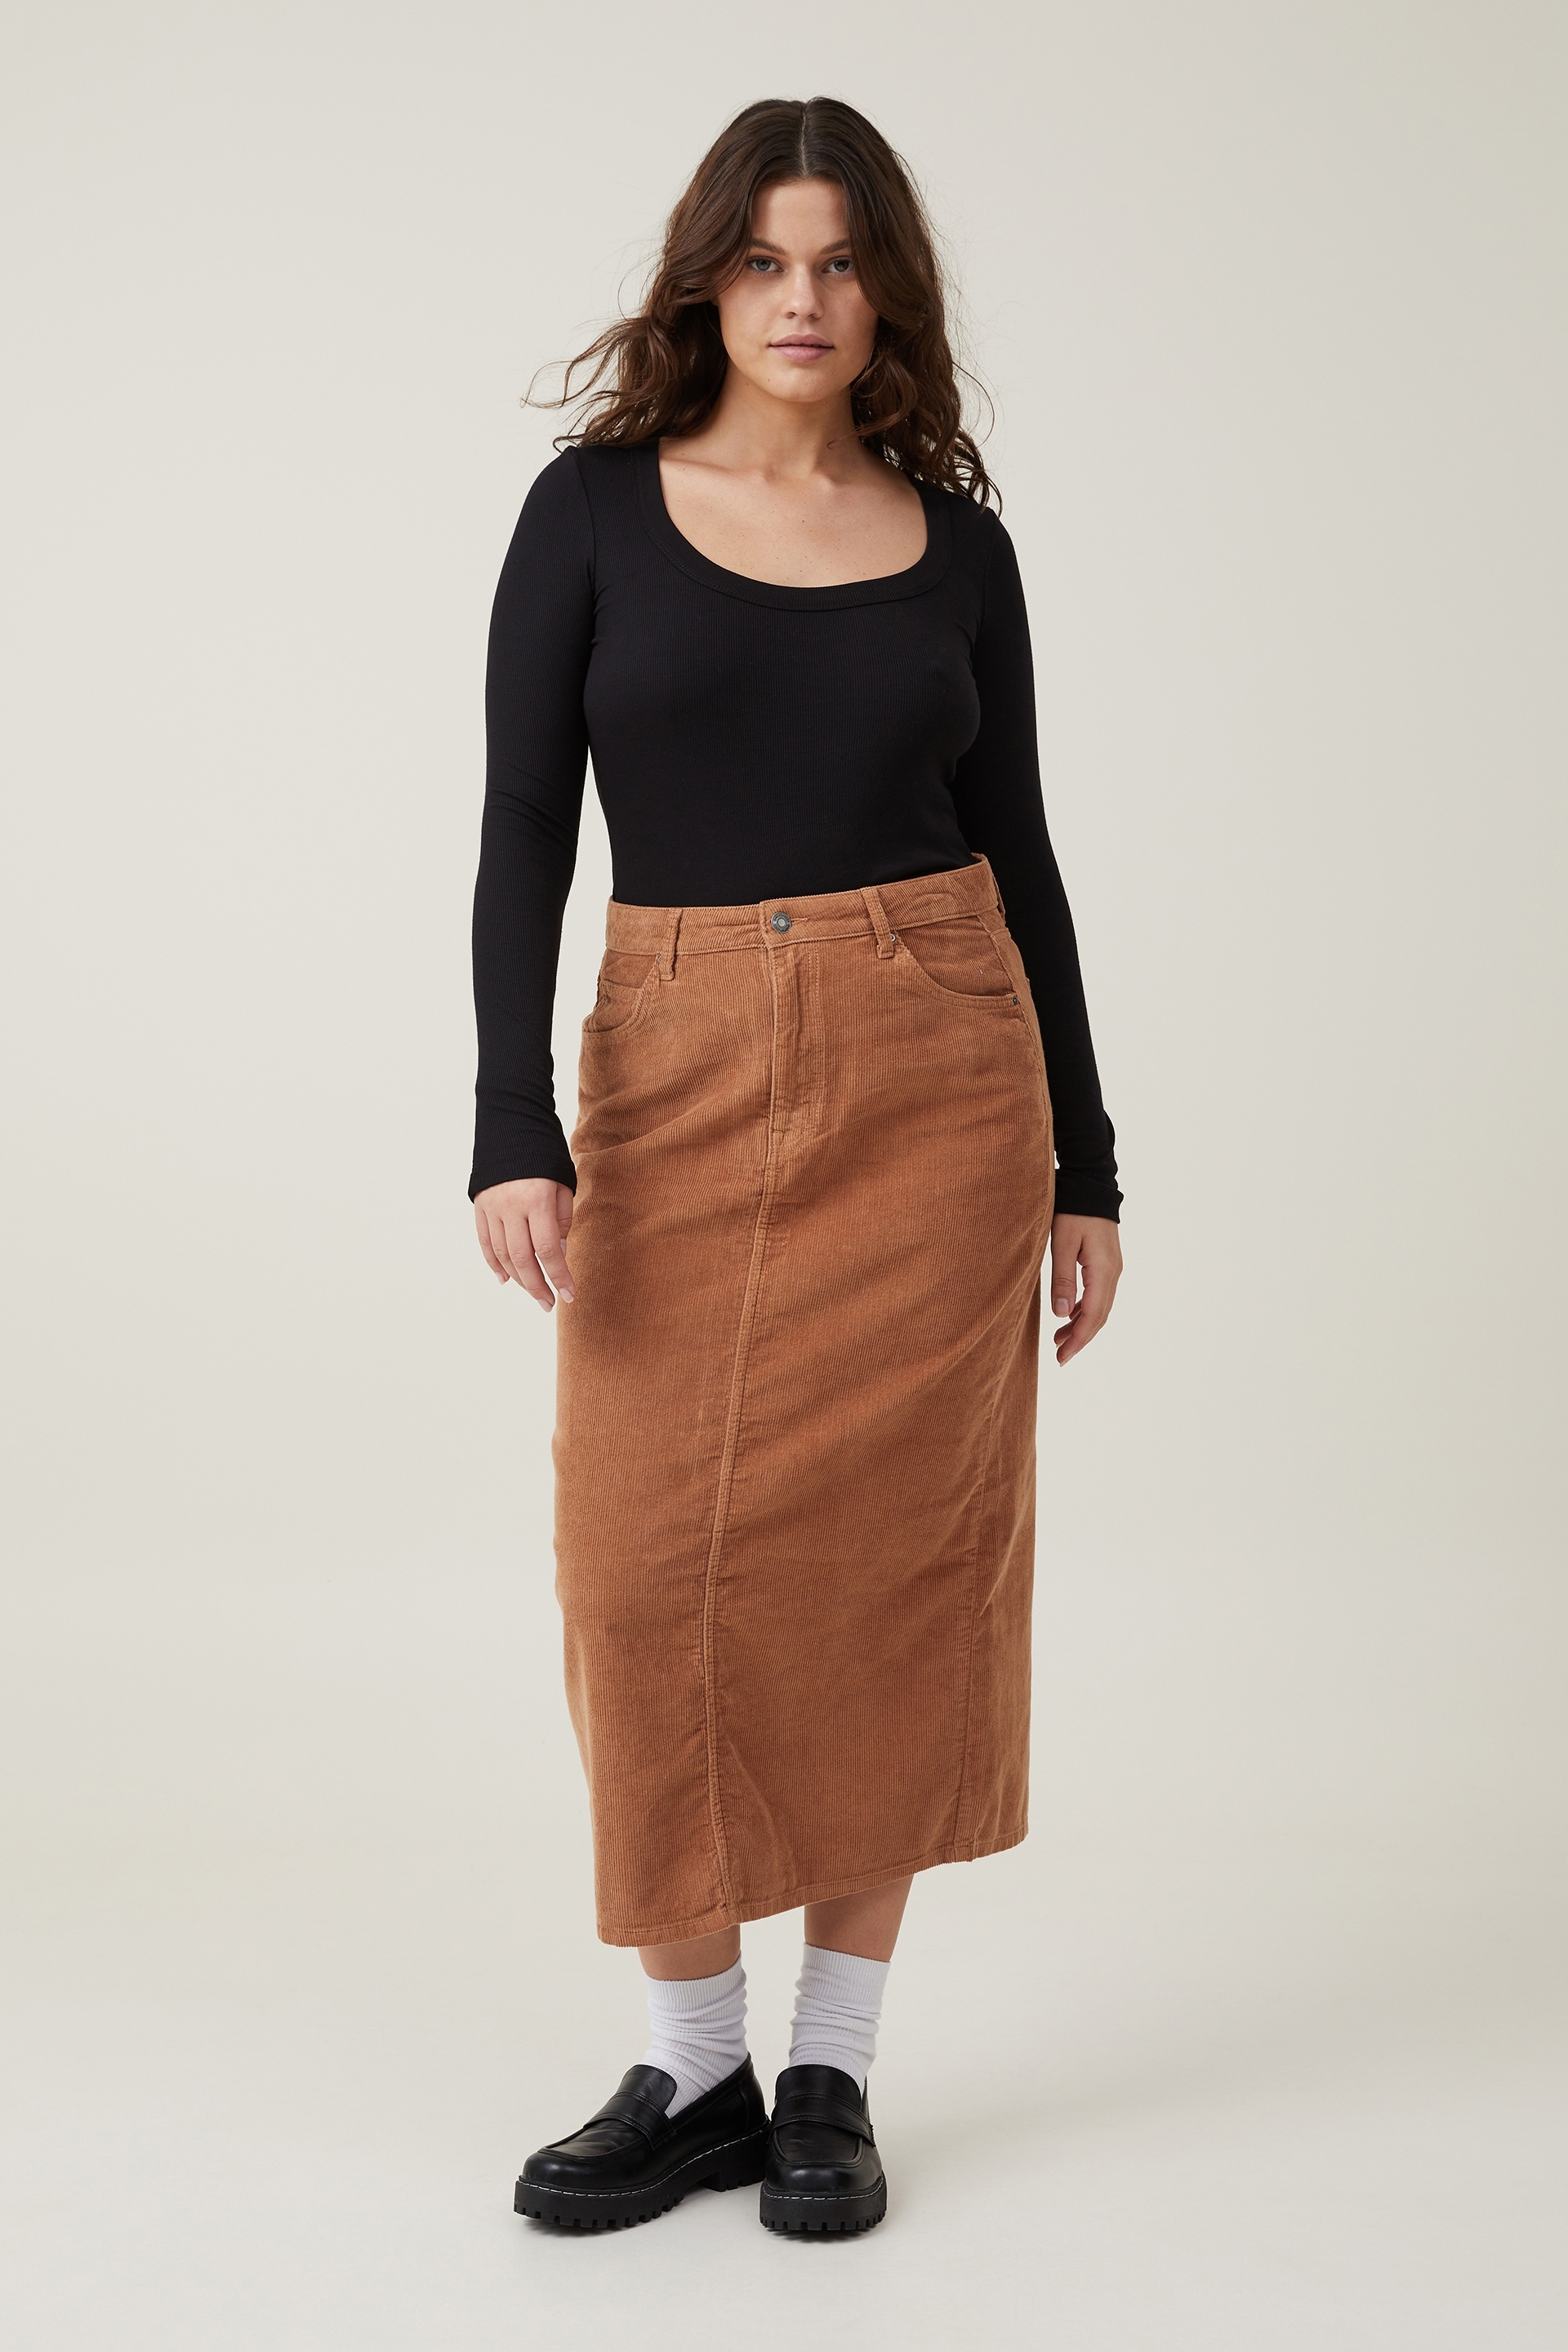 Cotton On Women - Cord Maxi Skirt - Pinecone